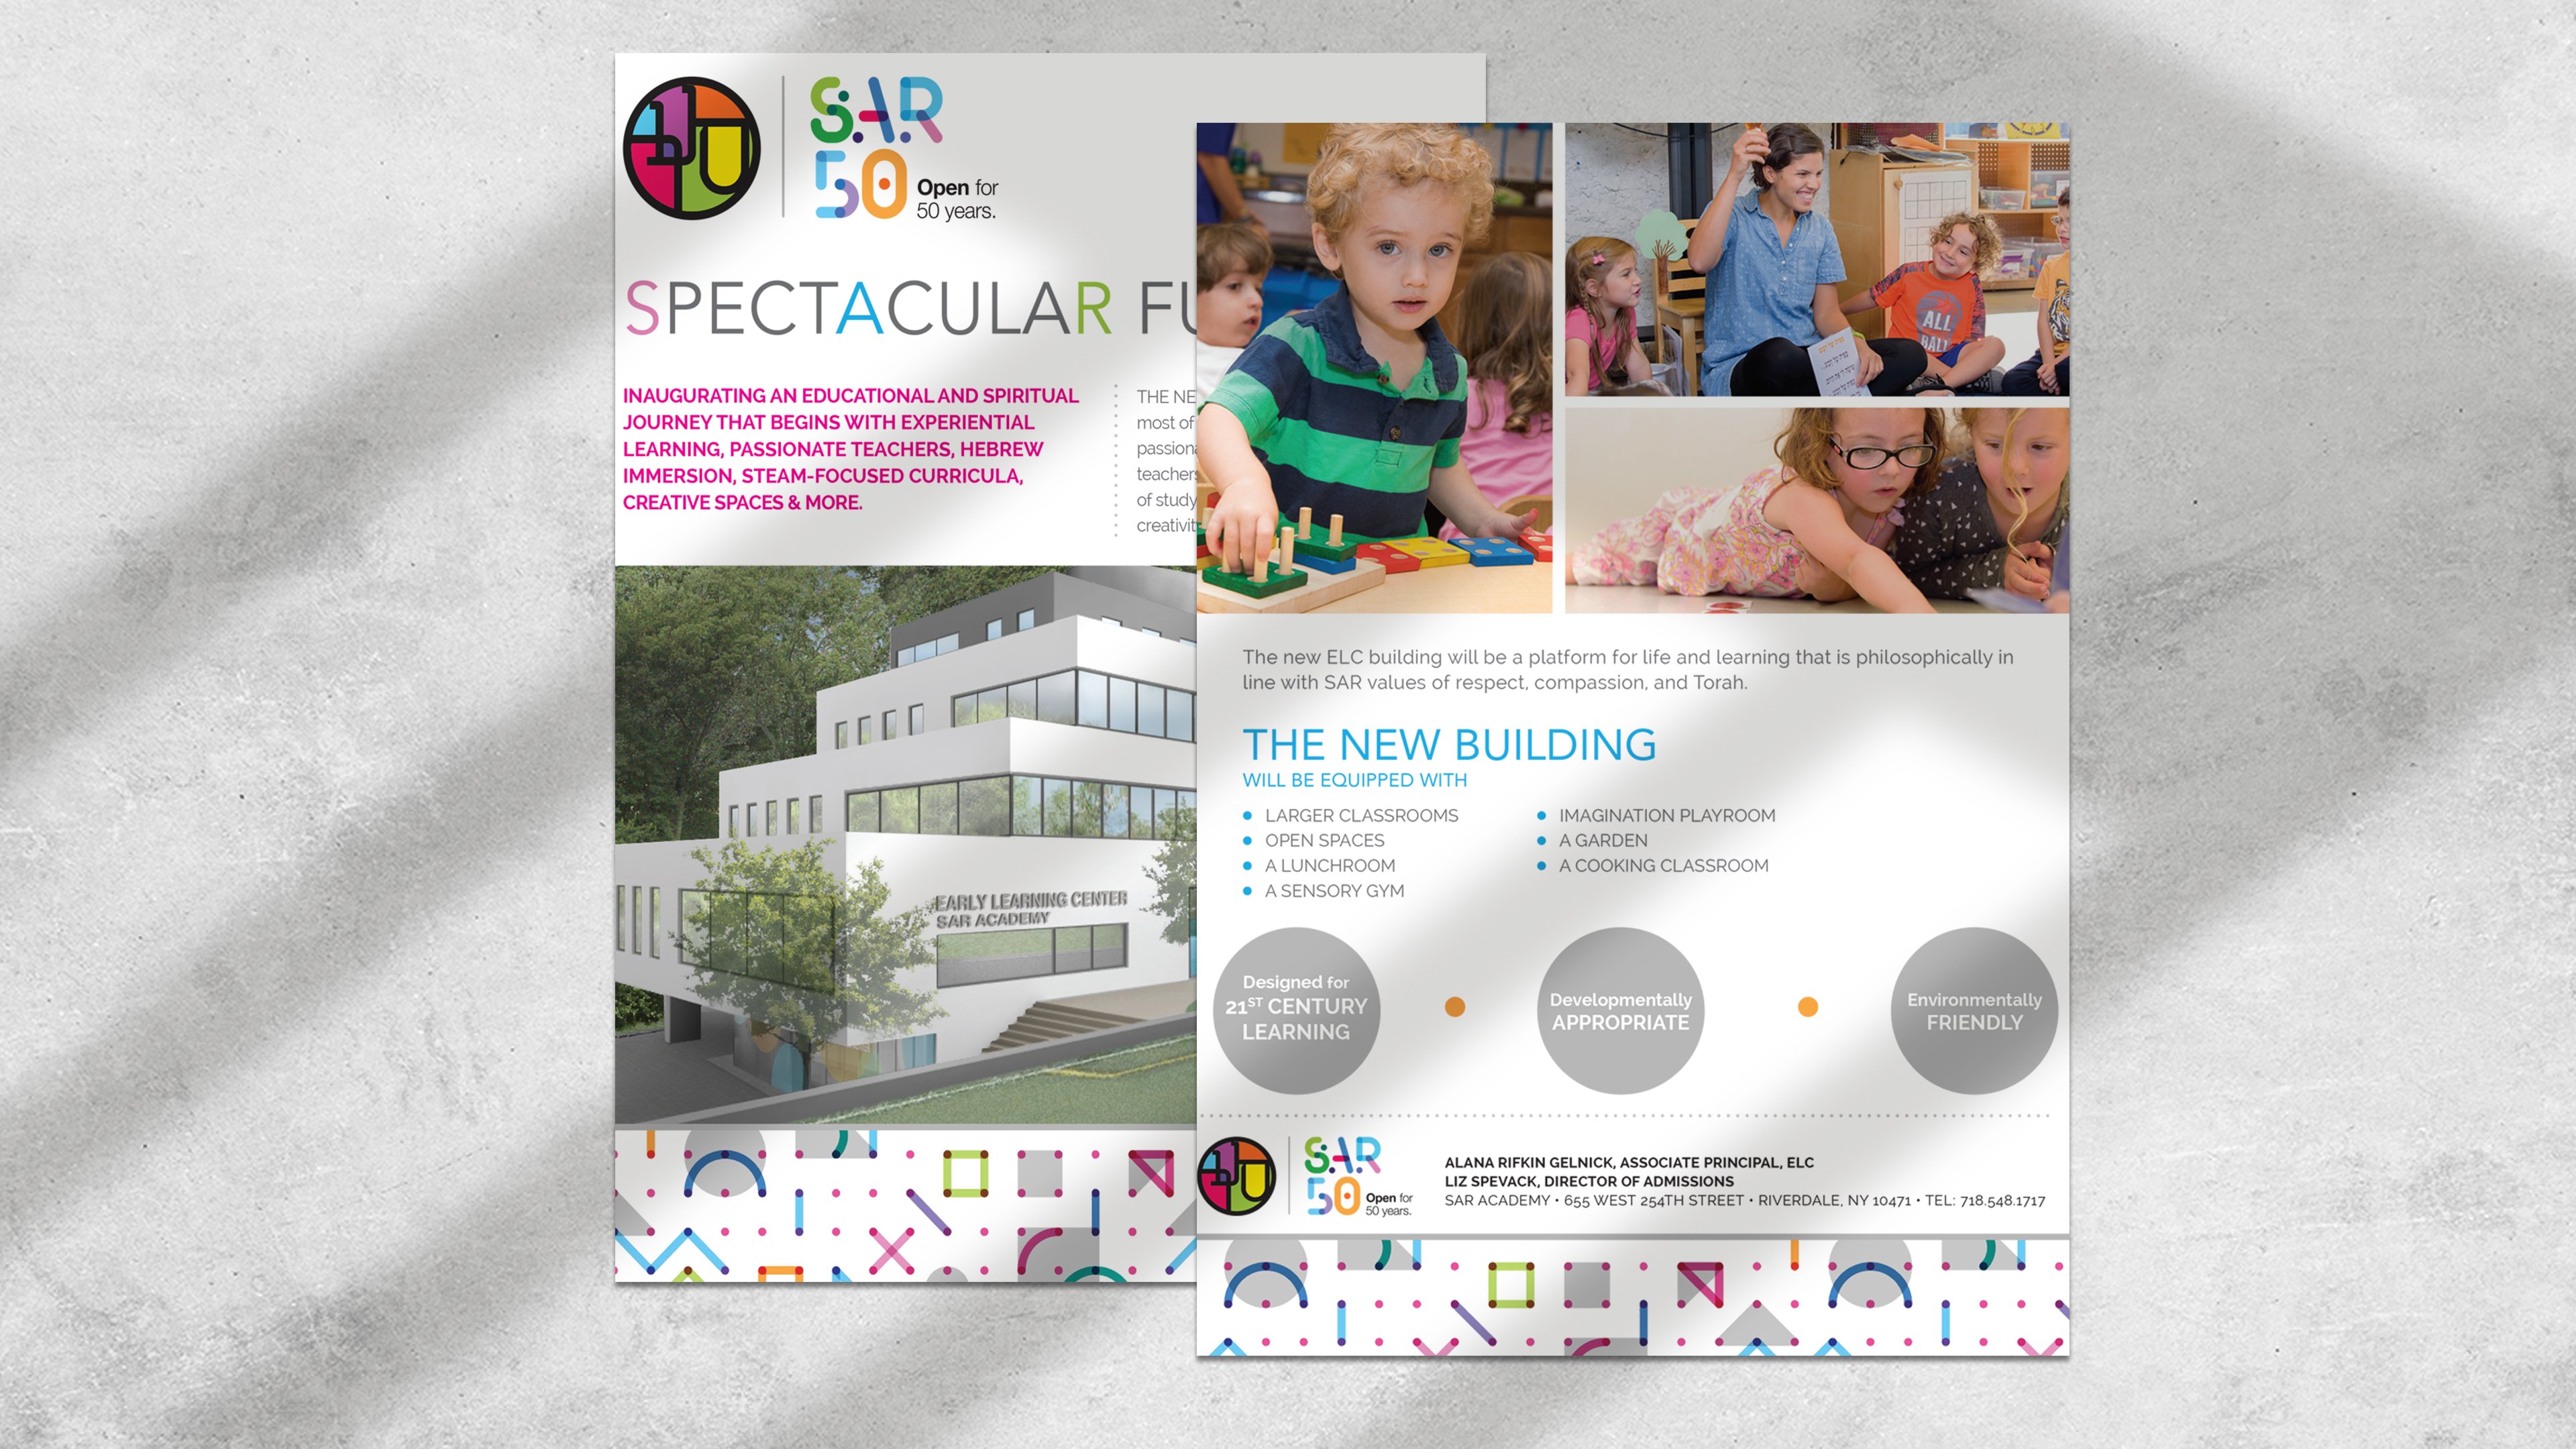 (SAR) Salanter Akiba Riverdale Academy - new building poster